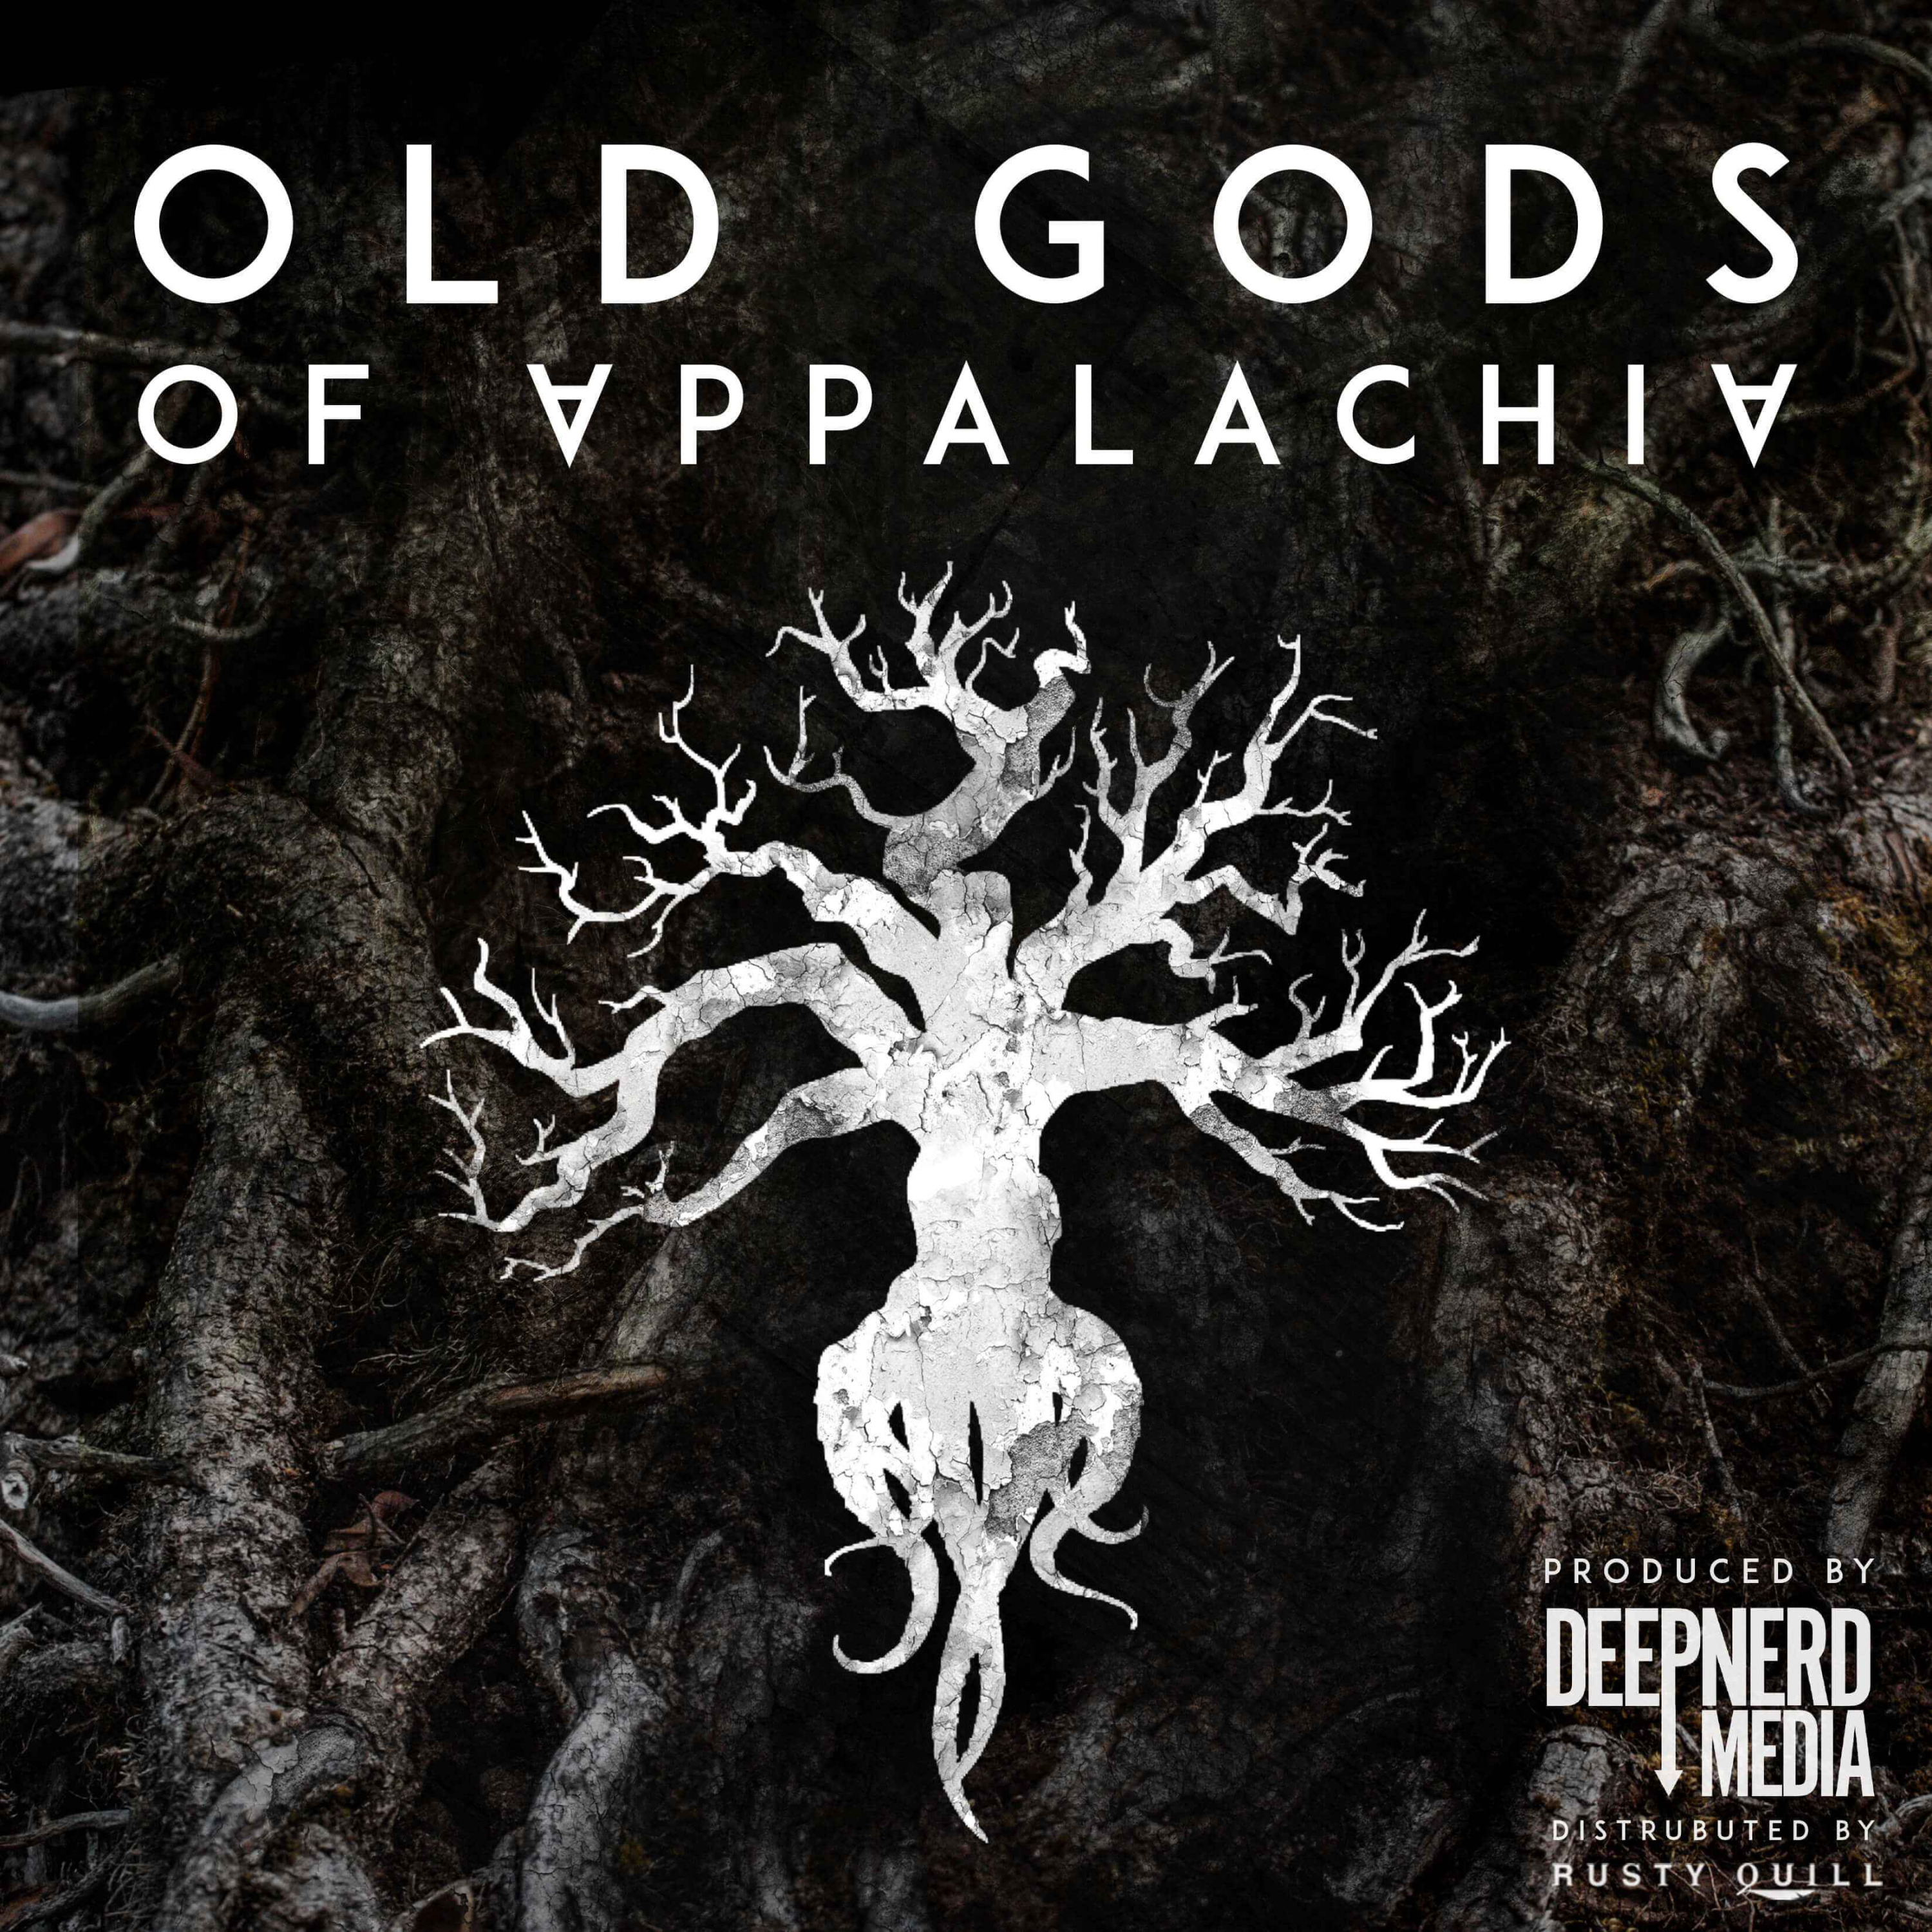 Old Gods of Appalachia podcast